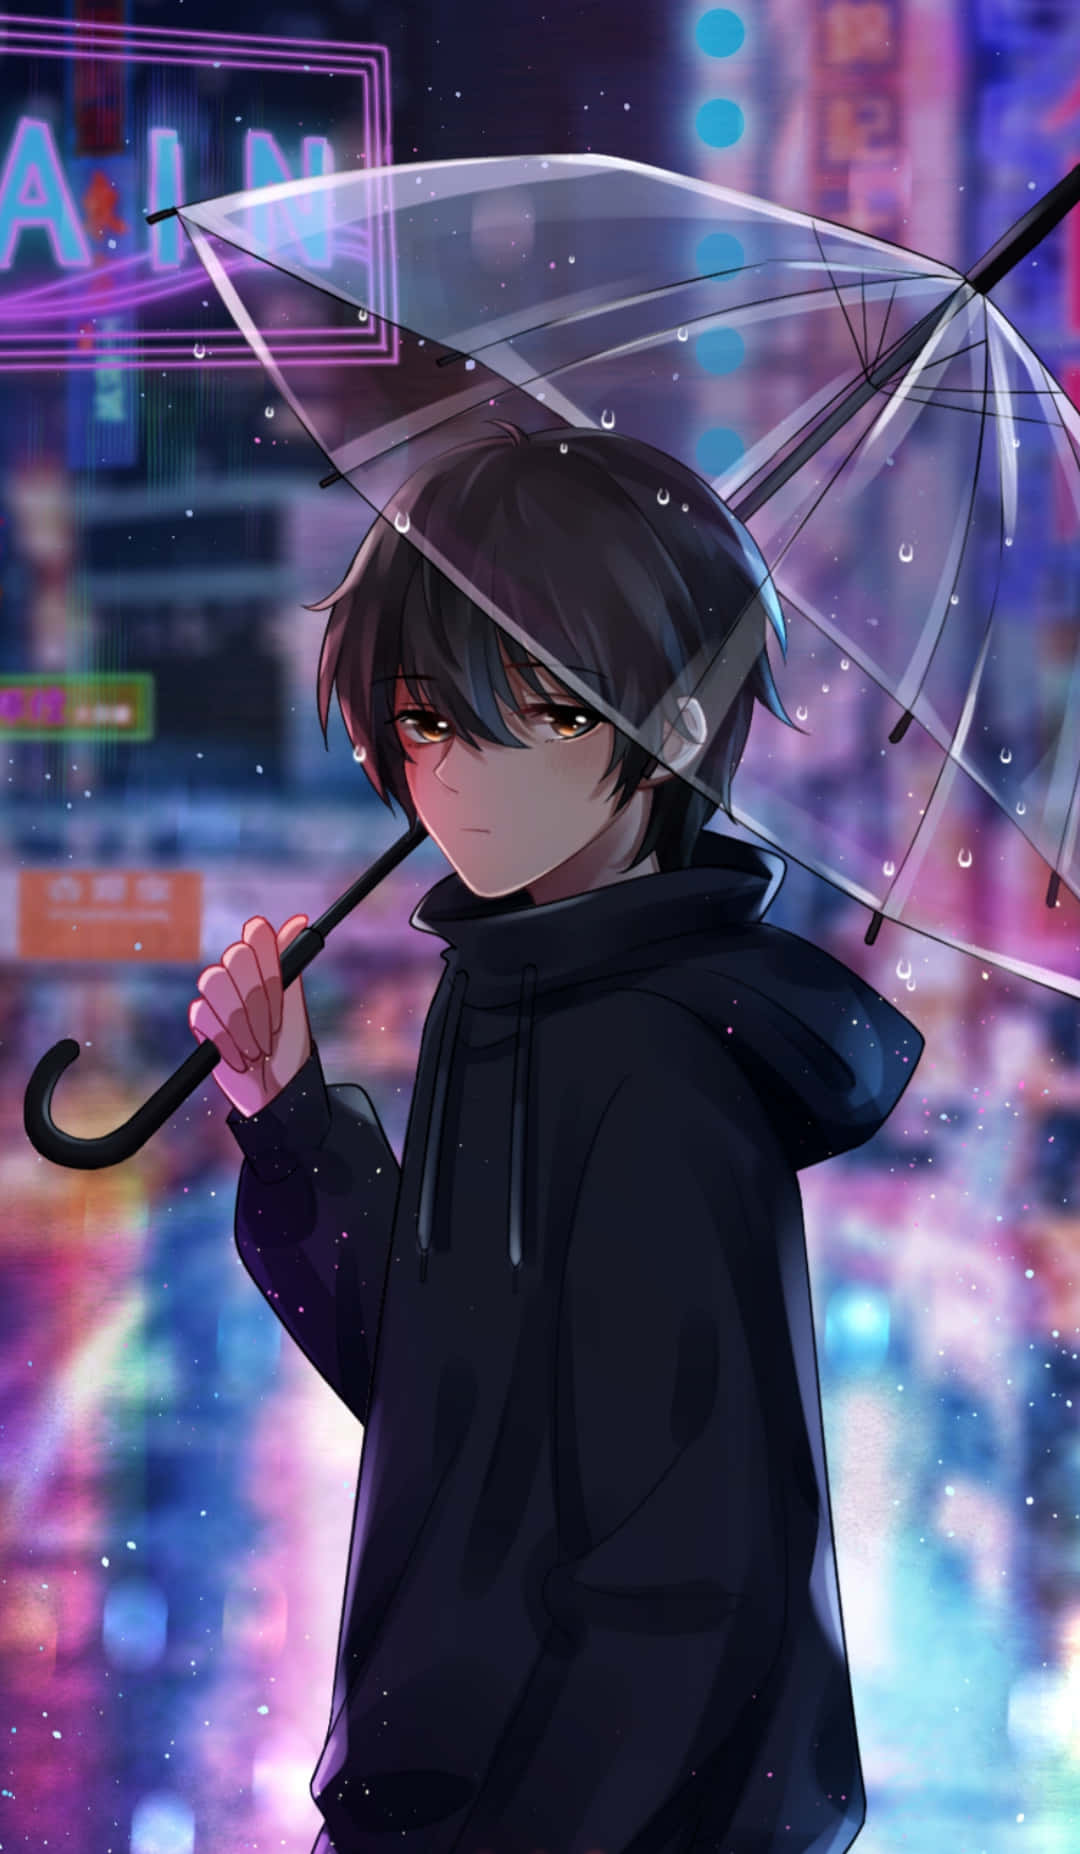 Anime Boy With Umbrella Phone Background